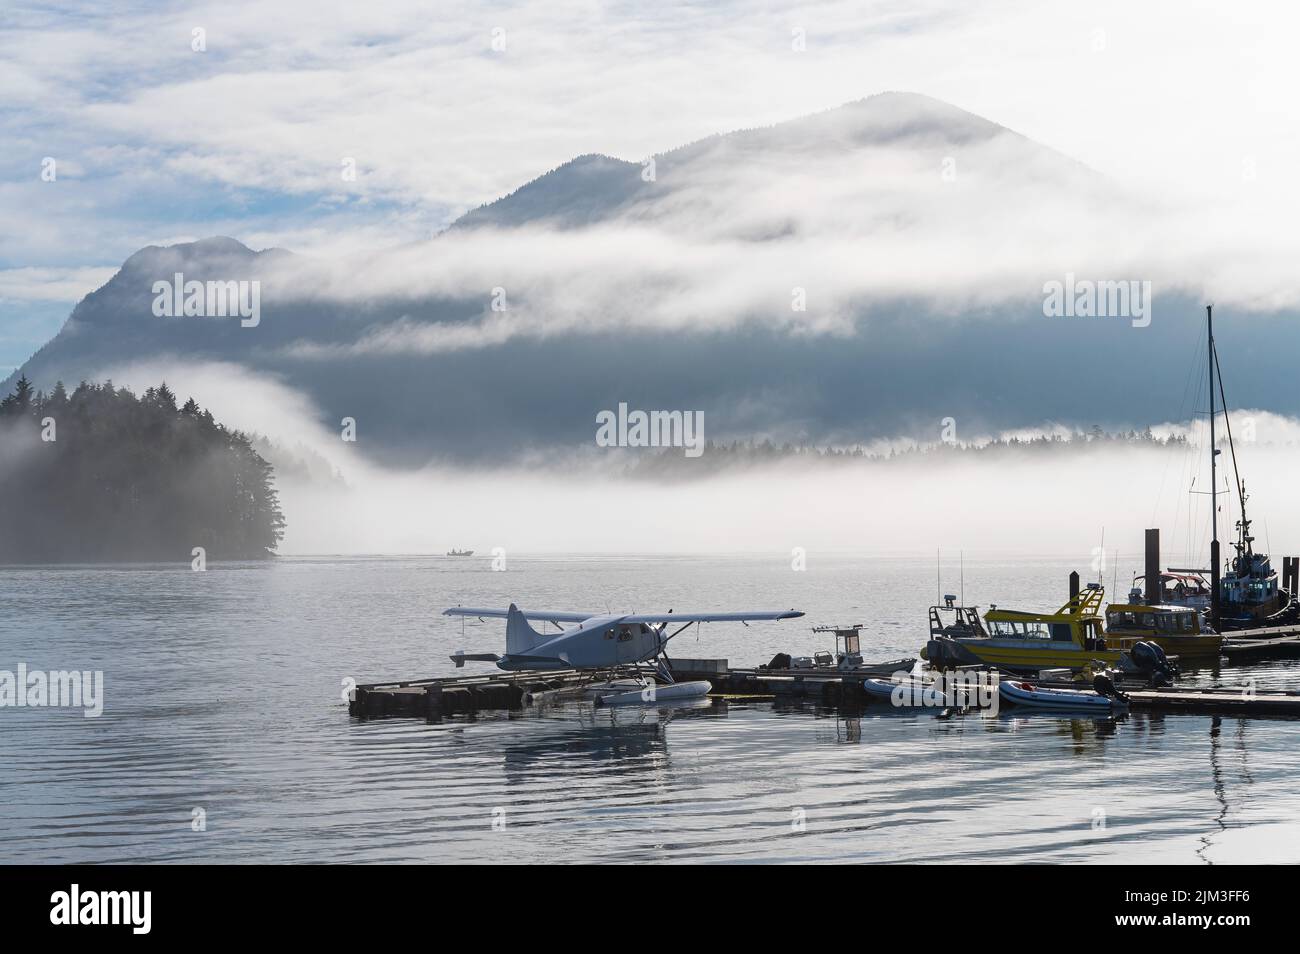 Seaplane and boats in Tofino harbour, Vancouver Island, British Columbia, Canada. Stock Photo